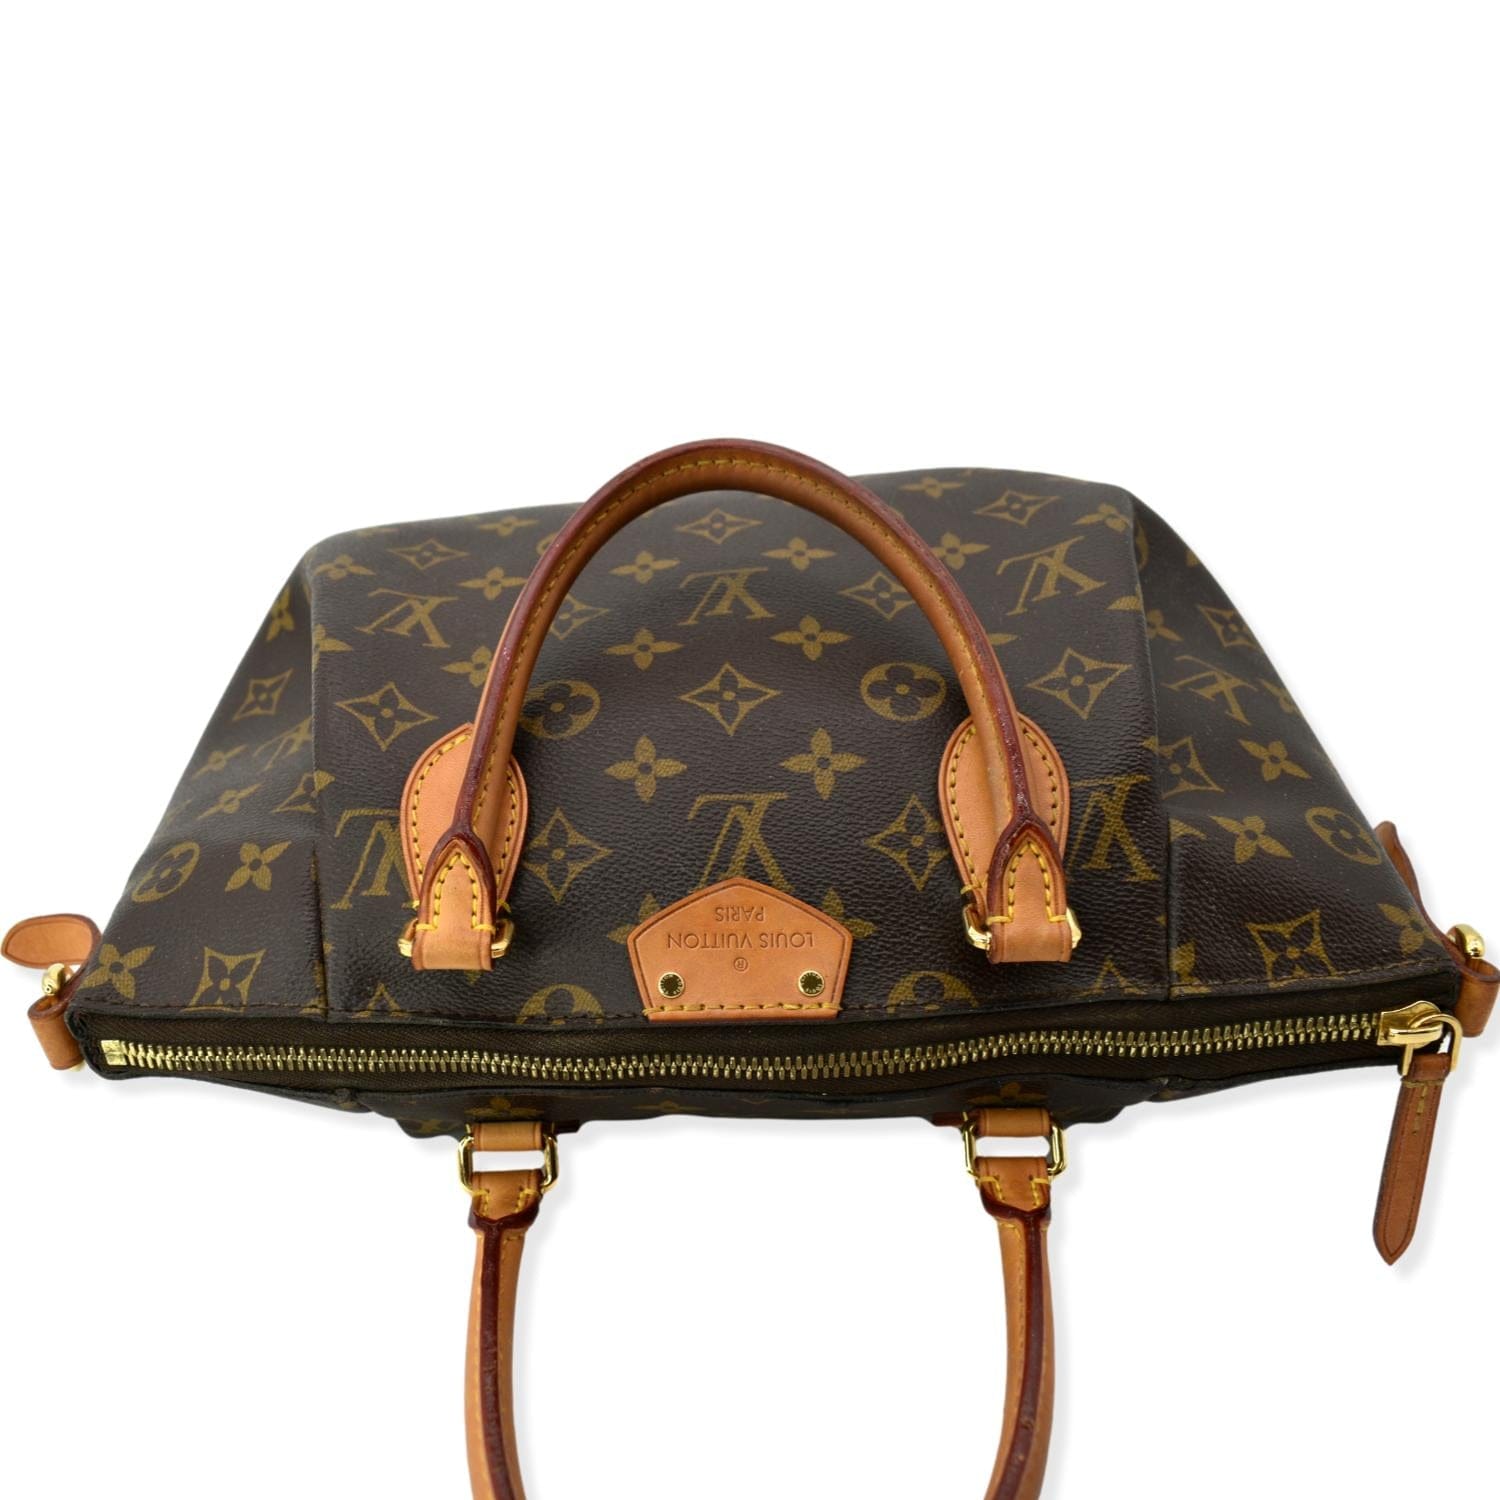 Turenne medium size handbag by Louis Vuitton  Vintage louis vuitton  handbags, Louis vuitton handbags, Women handbags